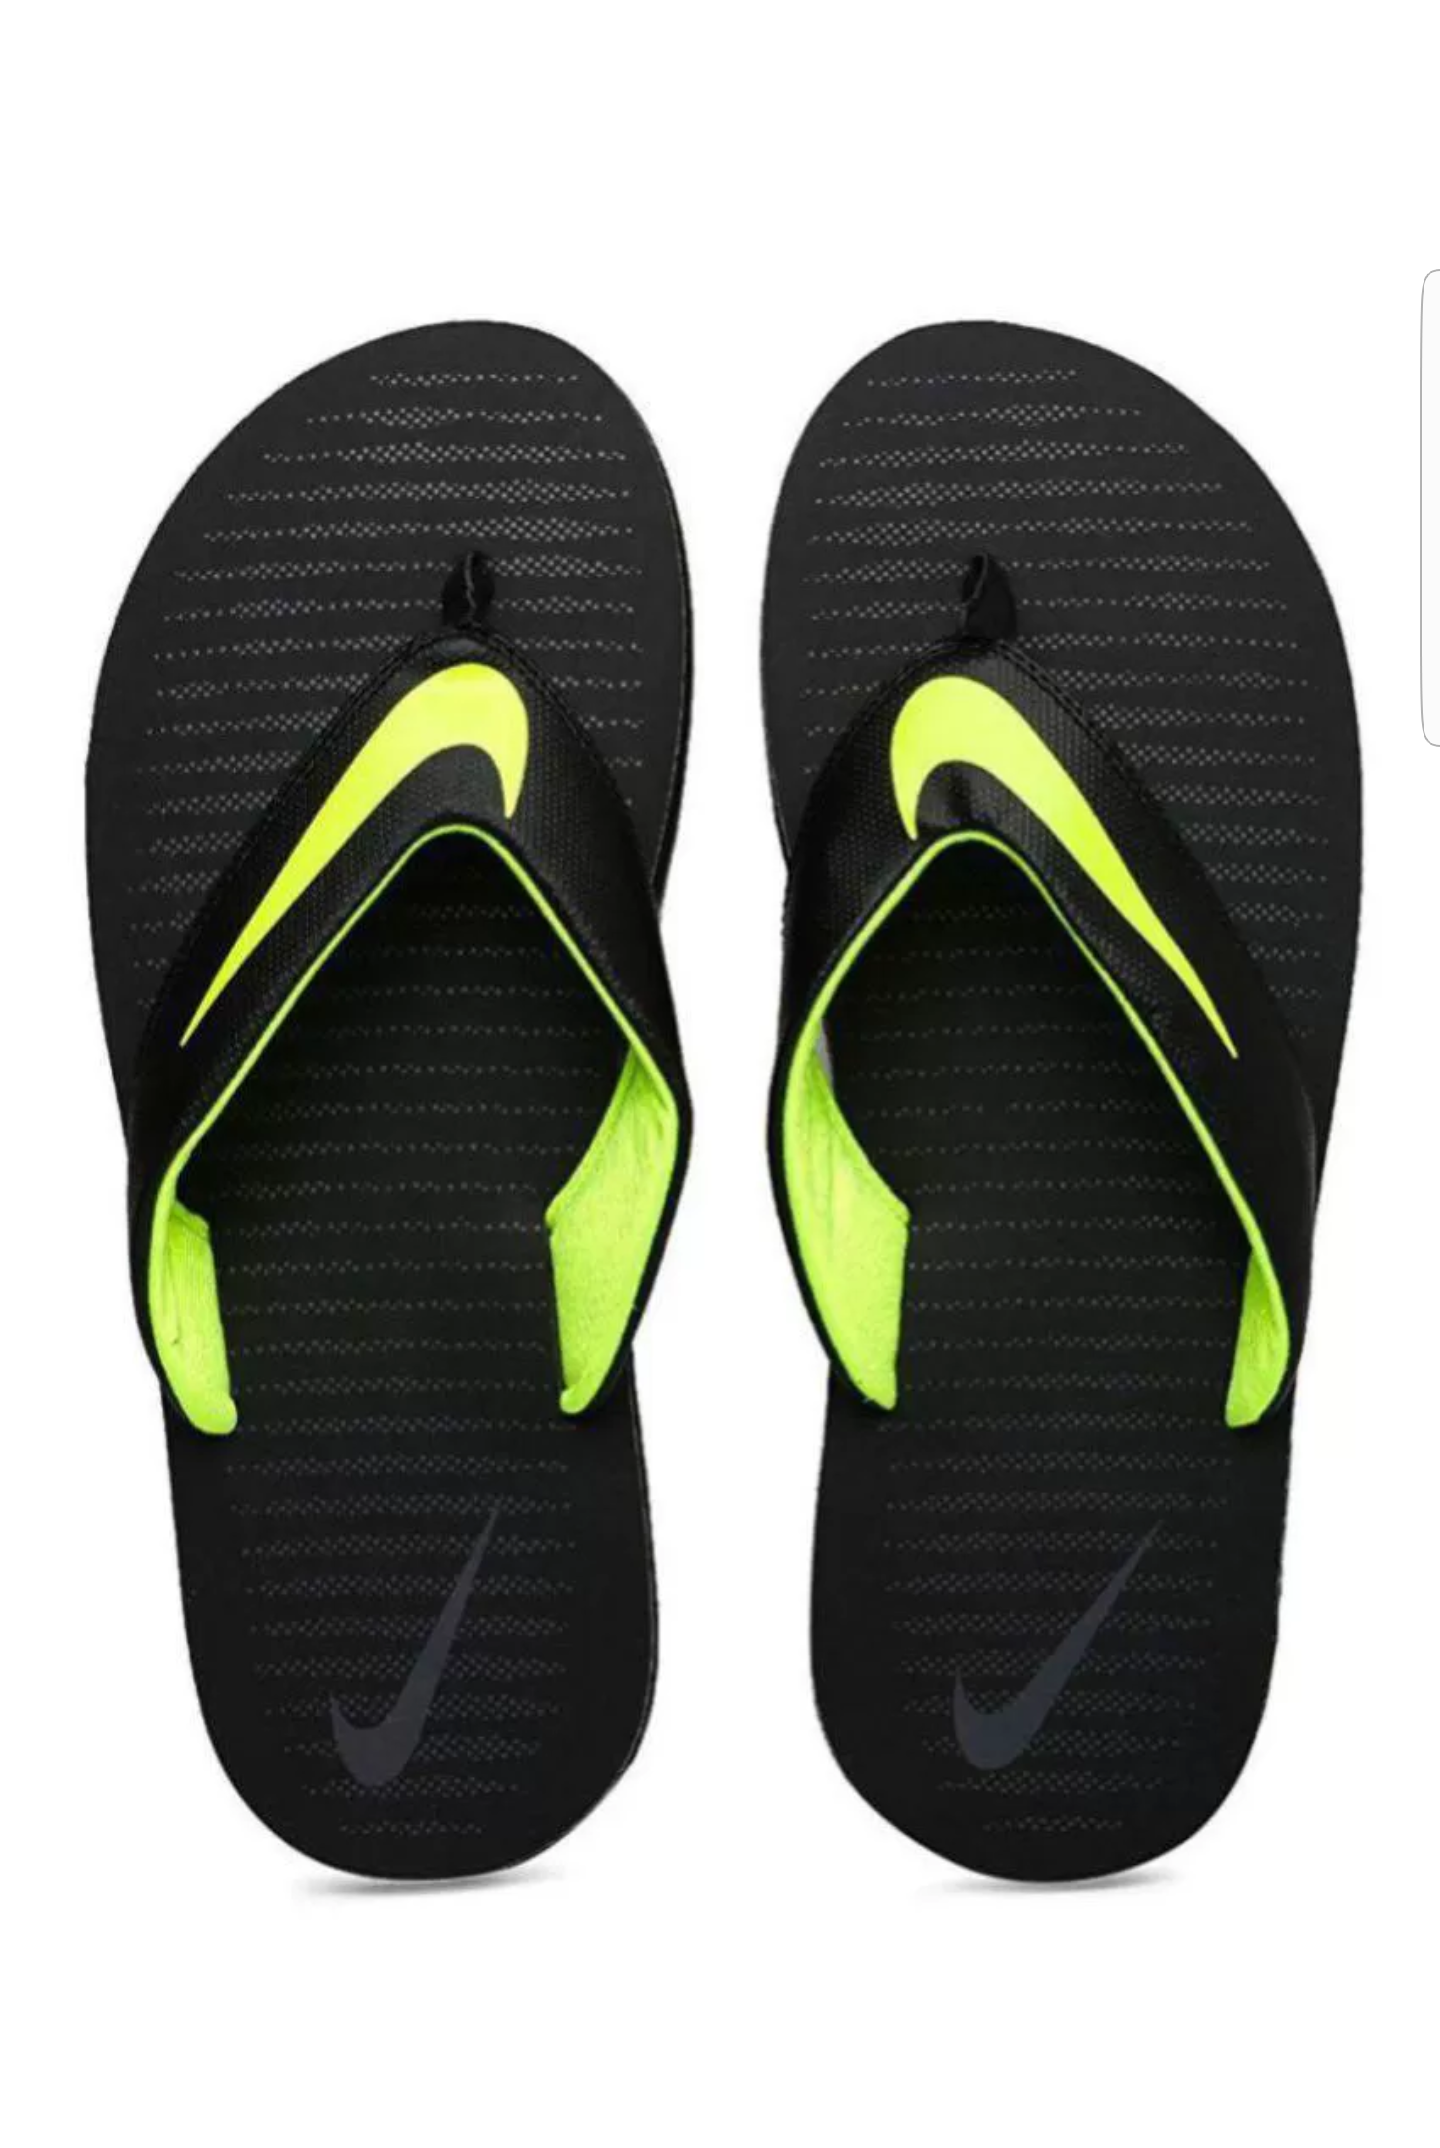 Nike Black Daily Slippers - Buy Nike 